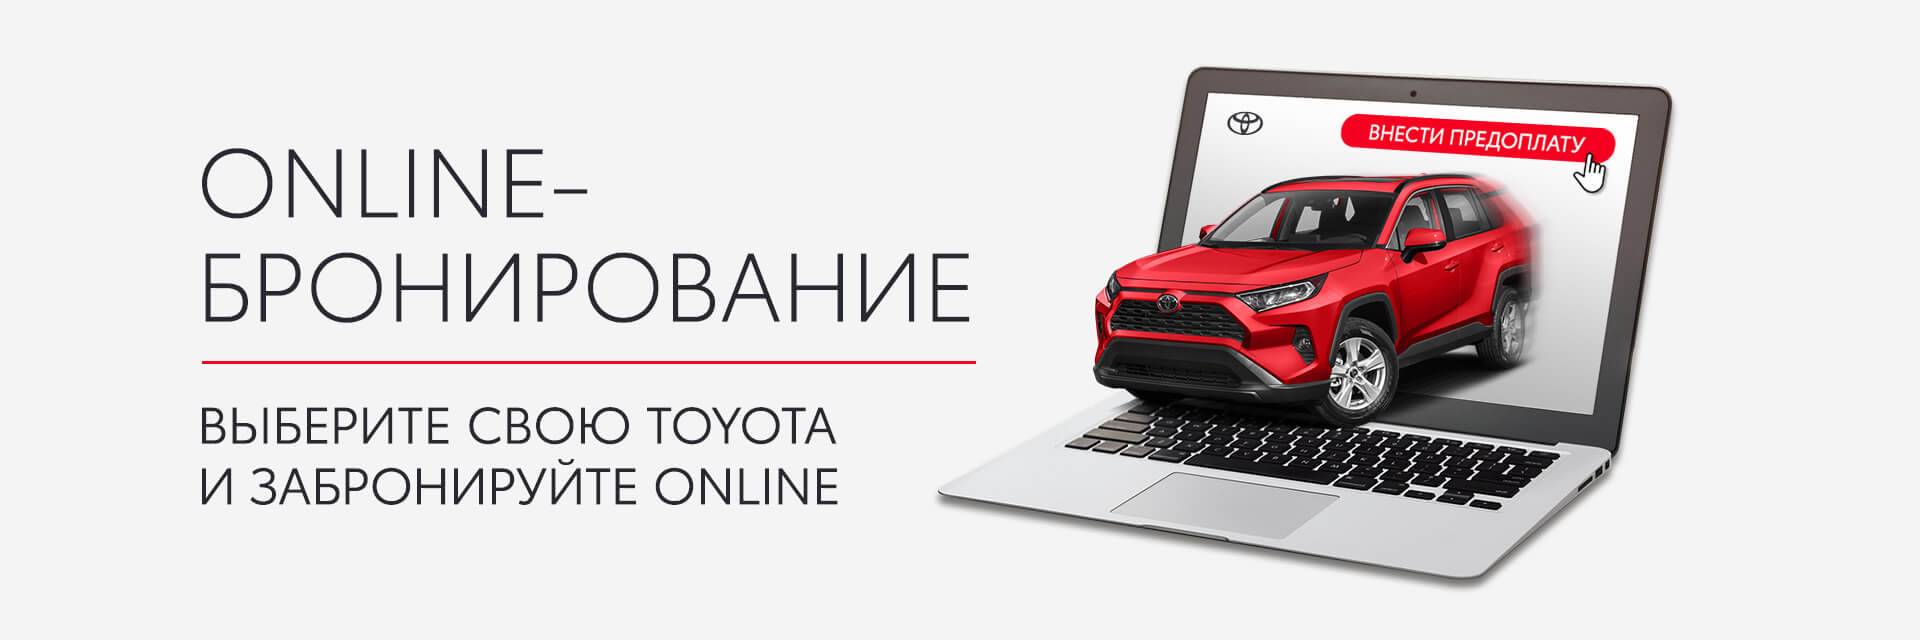 Купить Ноутбук Онлайн Екатеринбург